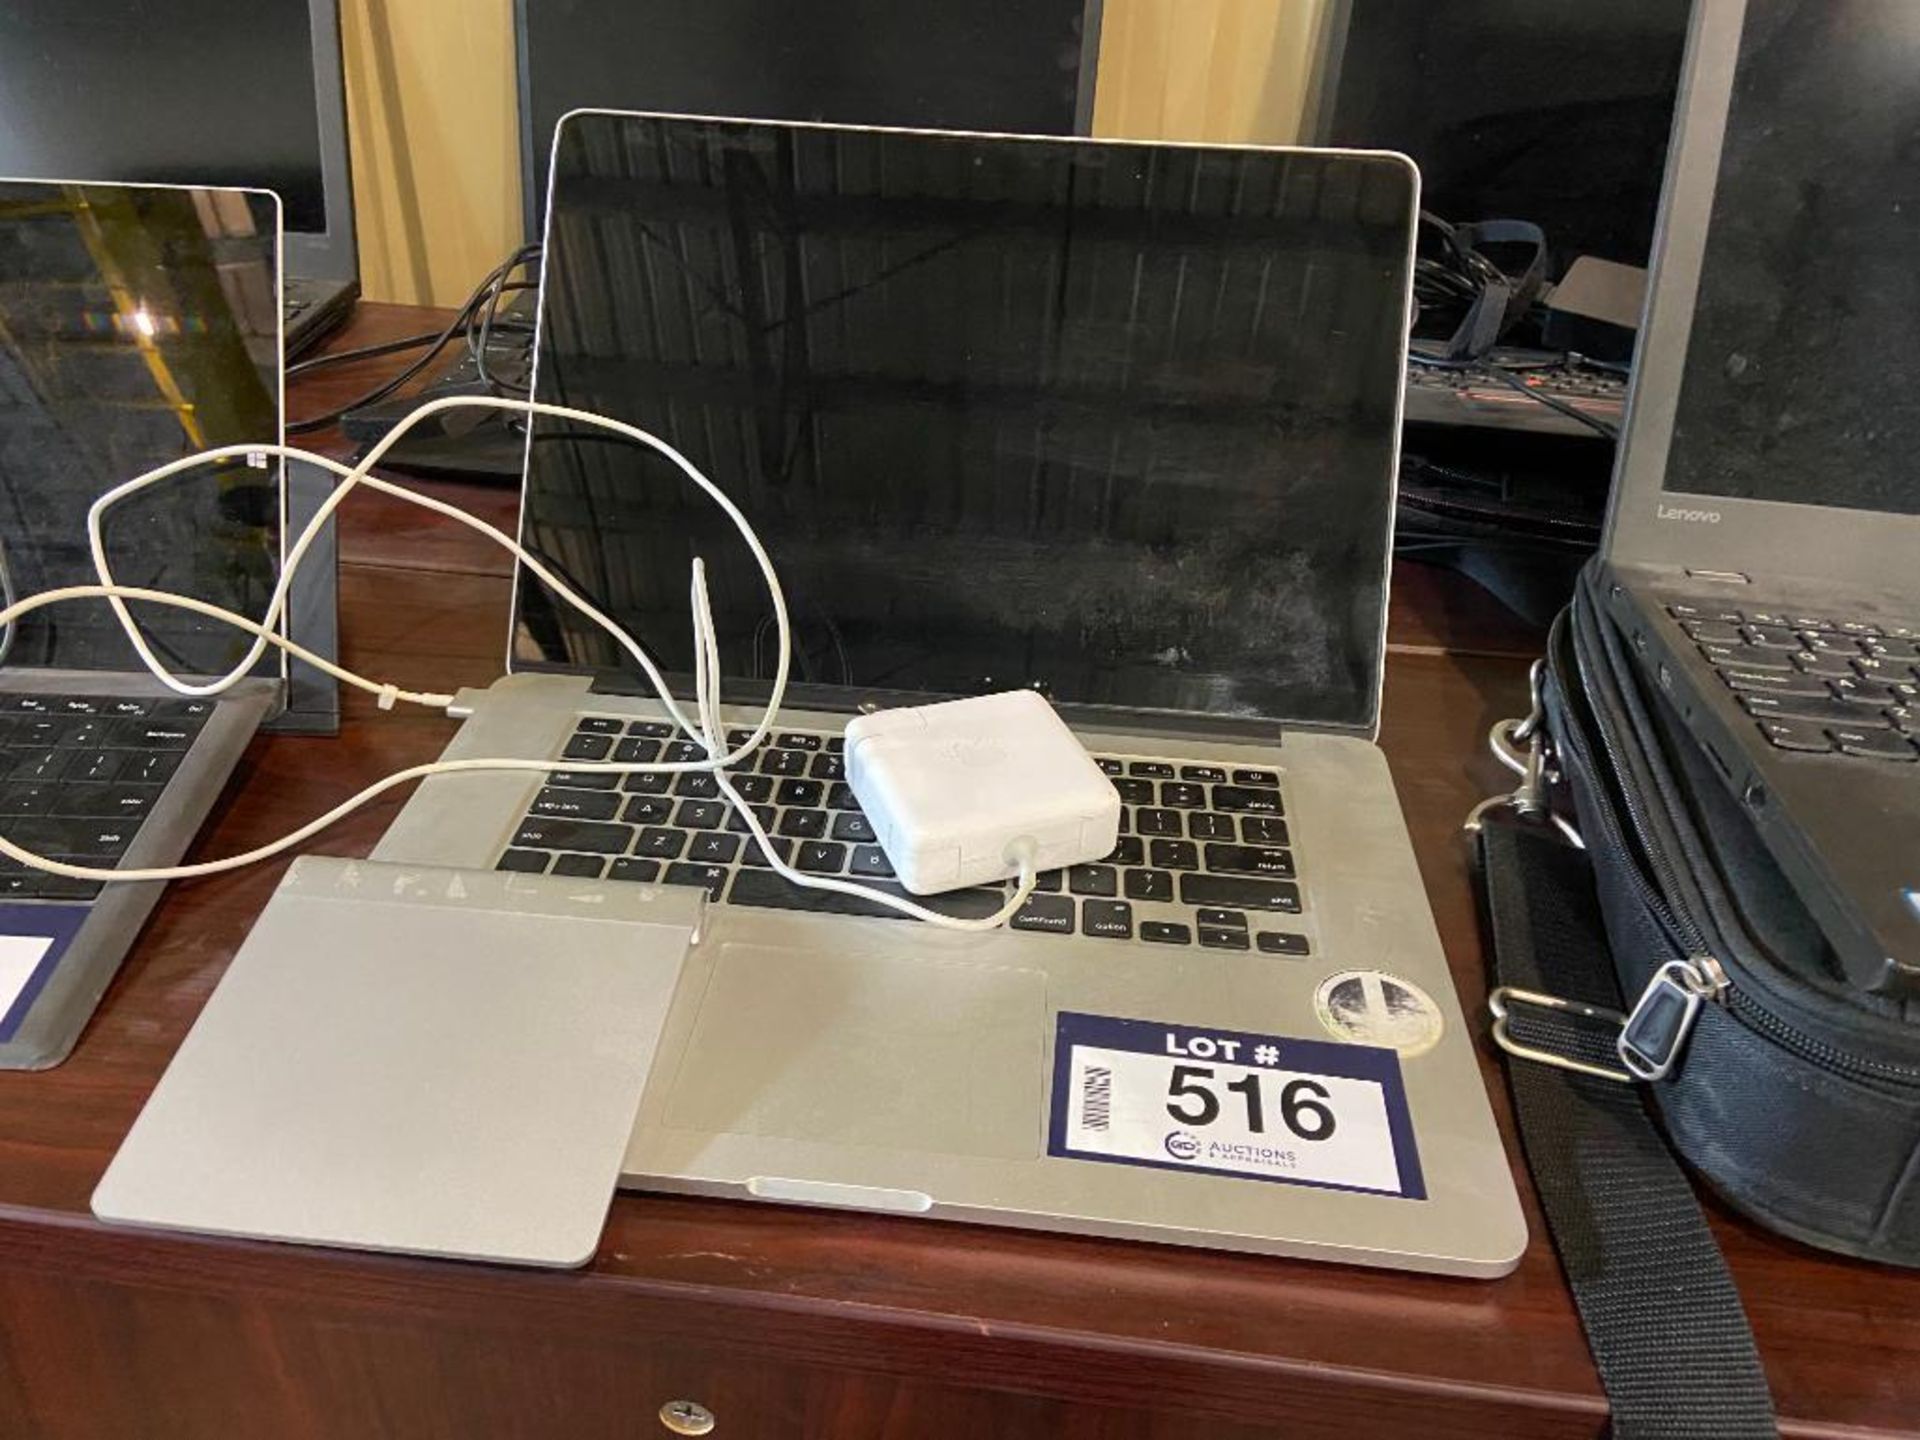 Apple MacBook Pro w/Track Pad.